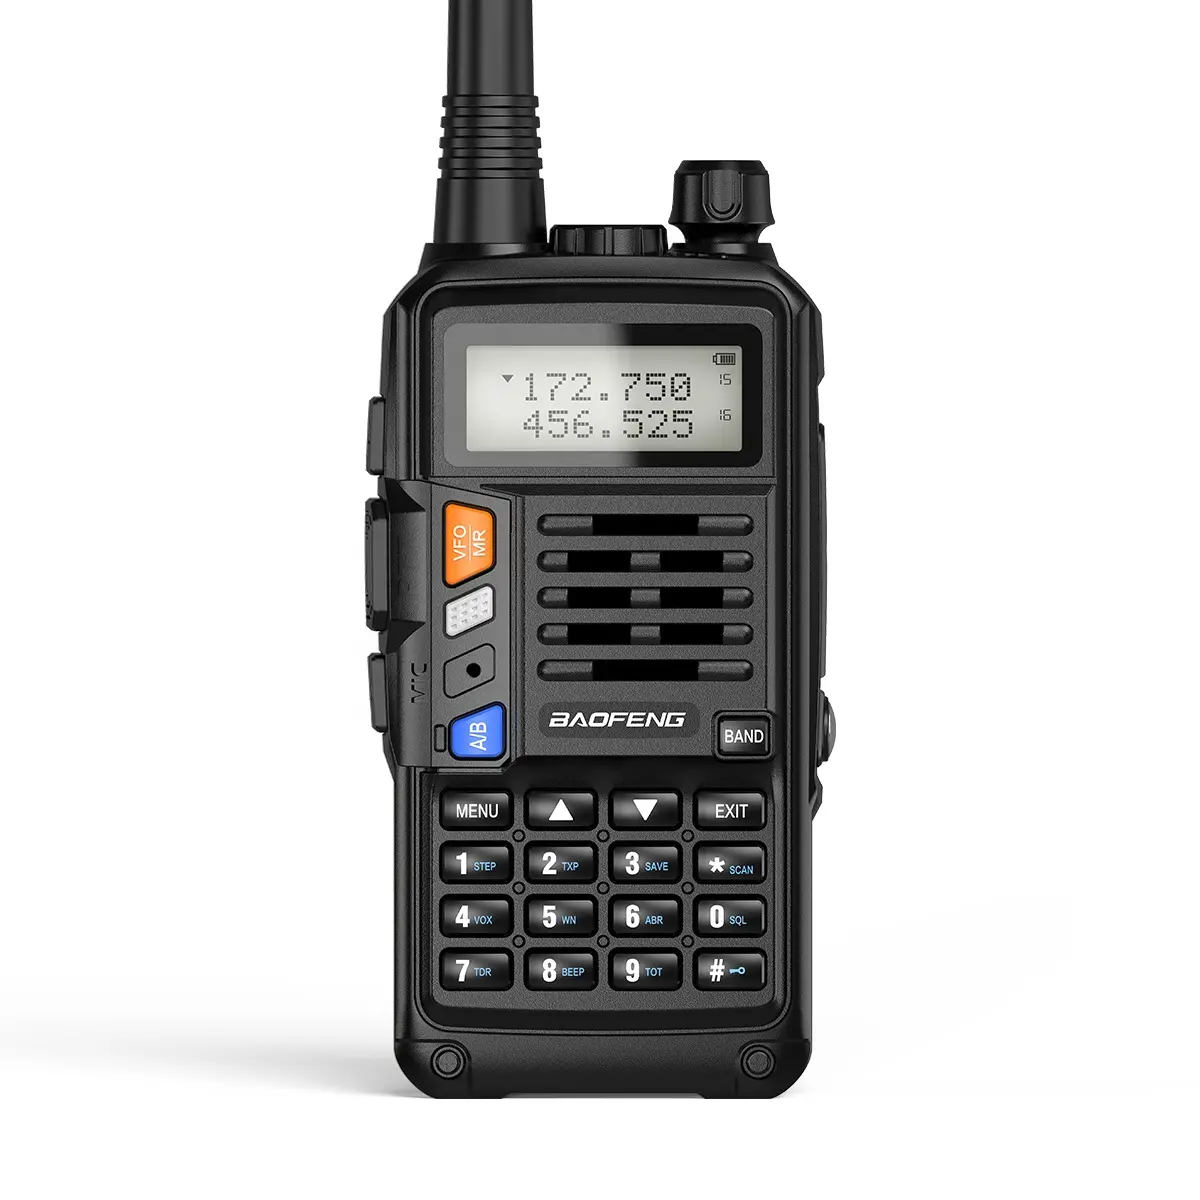 Transmissor de banda dupla para baofeng, walkie talkie com duas vias, UV-S9 plus, 8watts, fábrica original, baofeng s9 plus